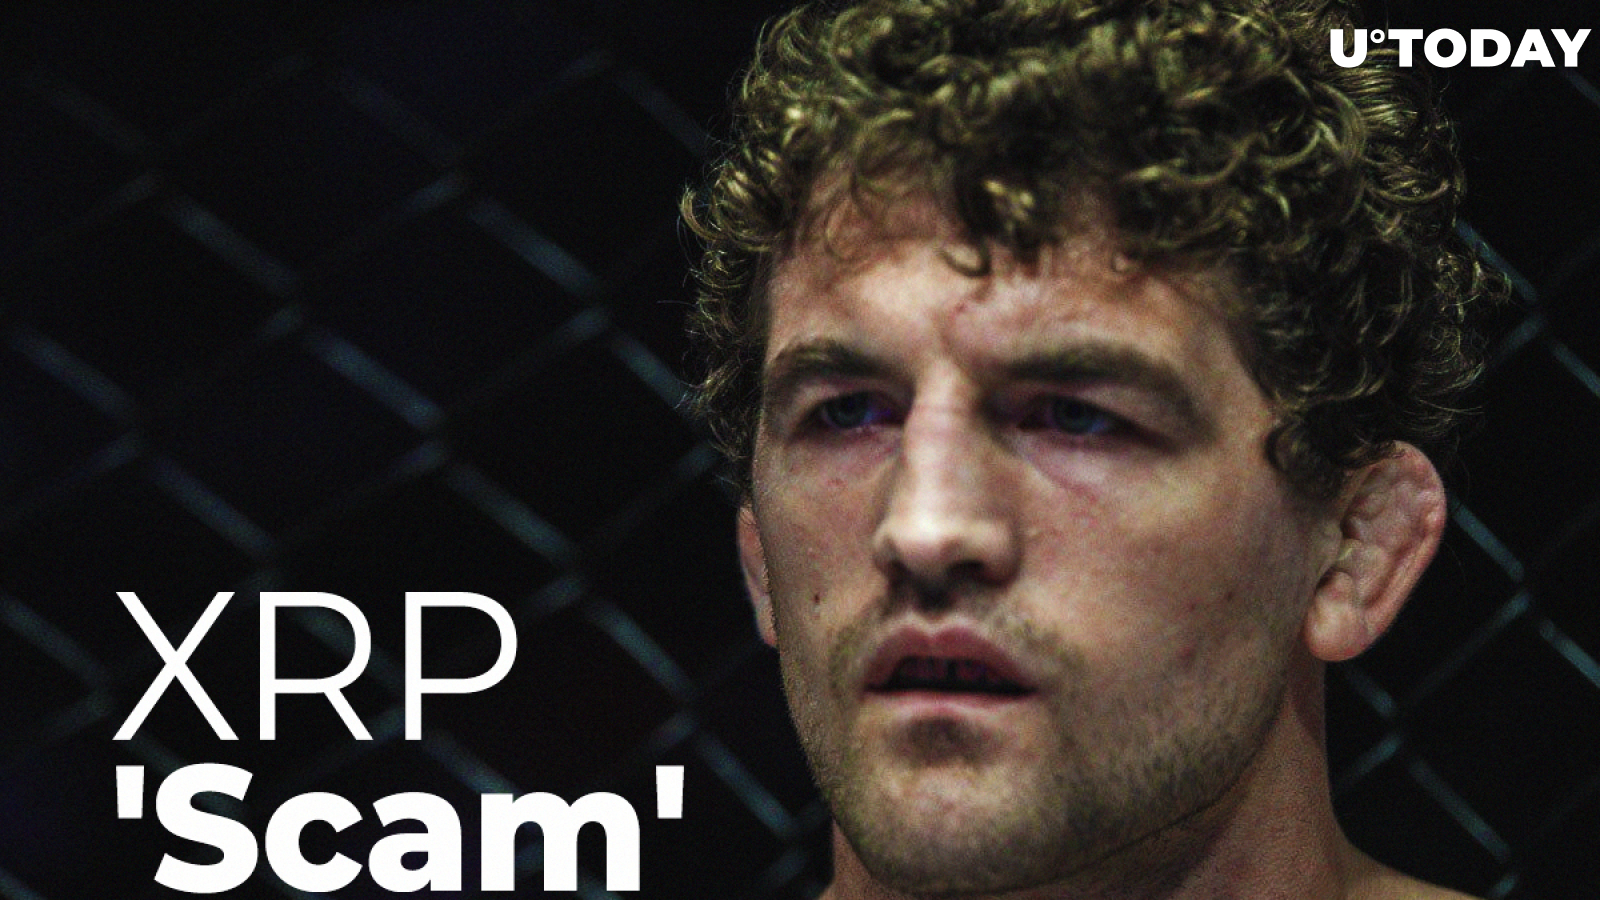 XRP Called 'Scam' by Former UFC Fighter Ben Askren